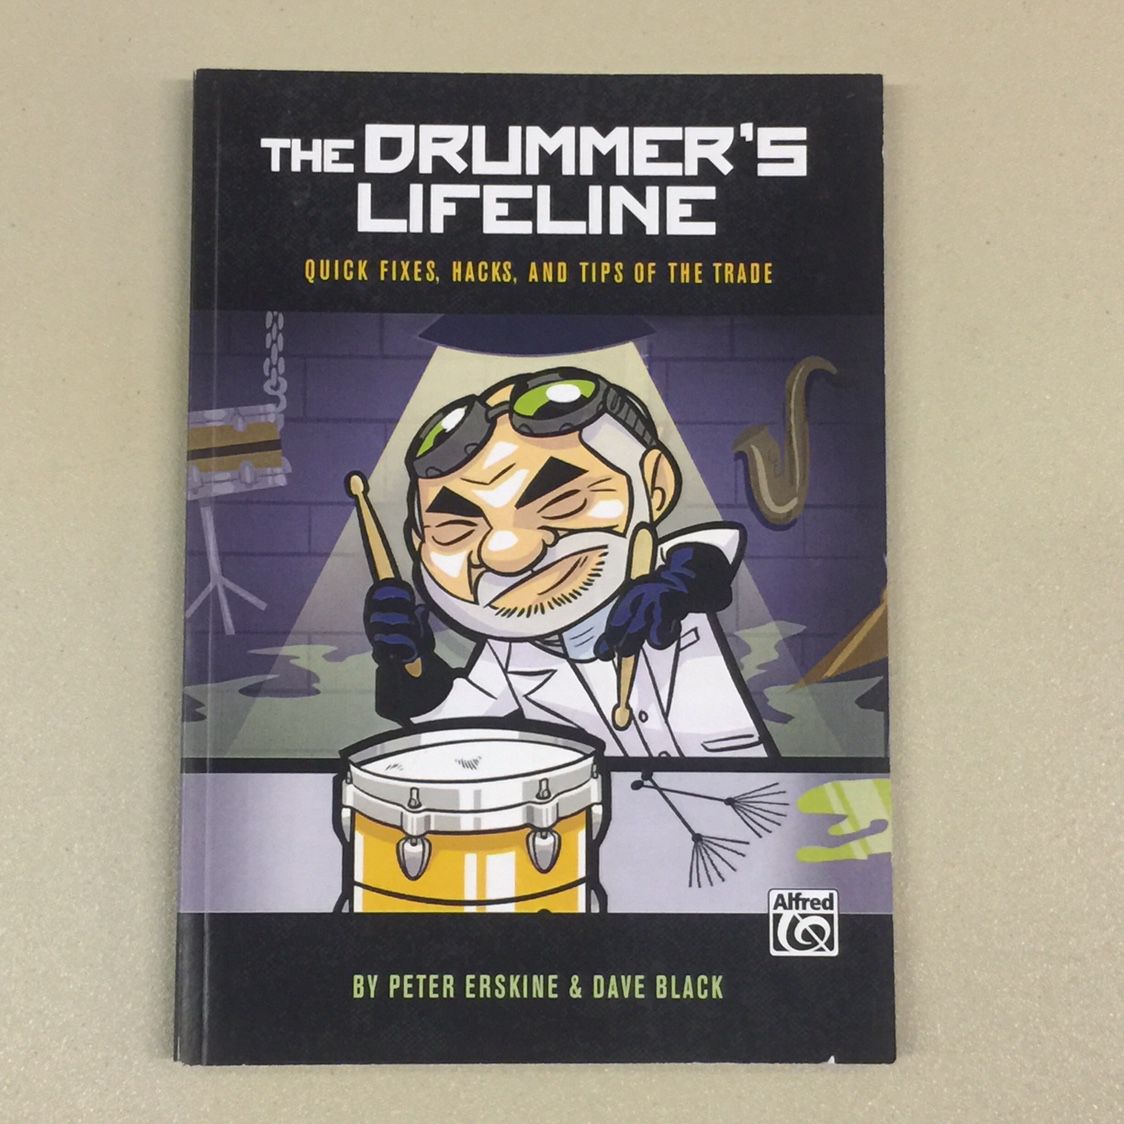 The Drummer’s Lifeline